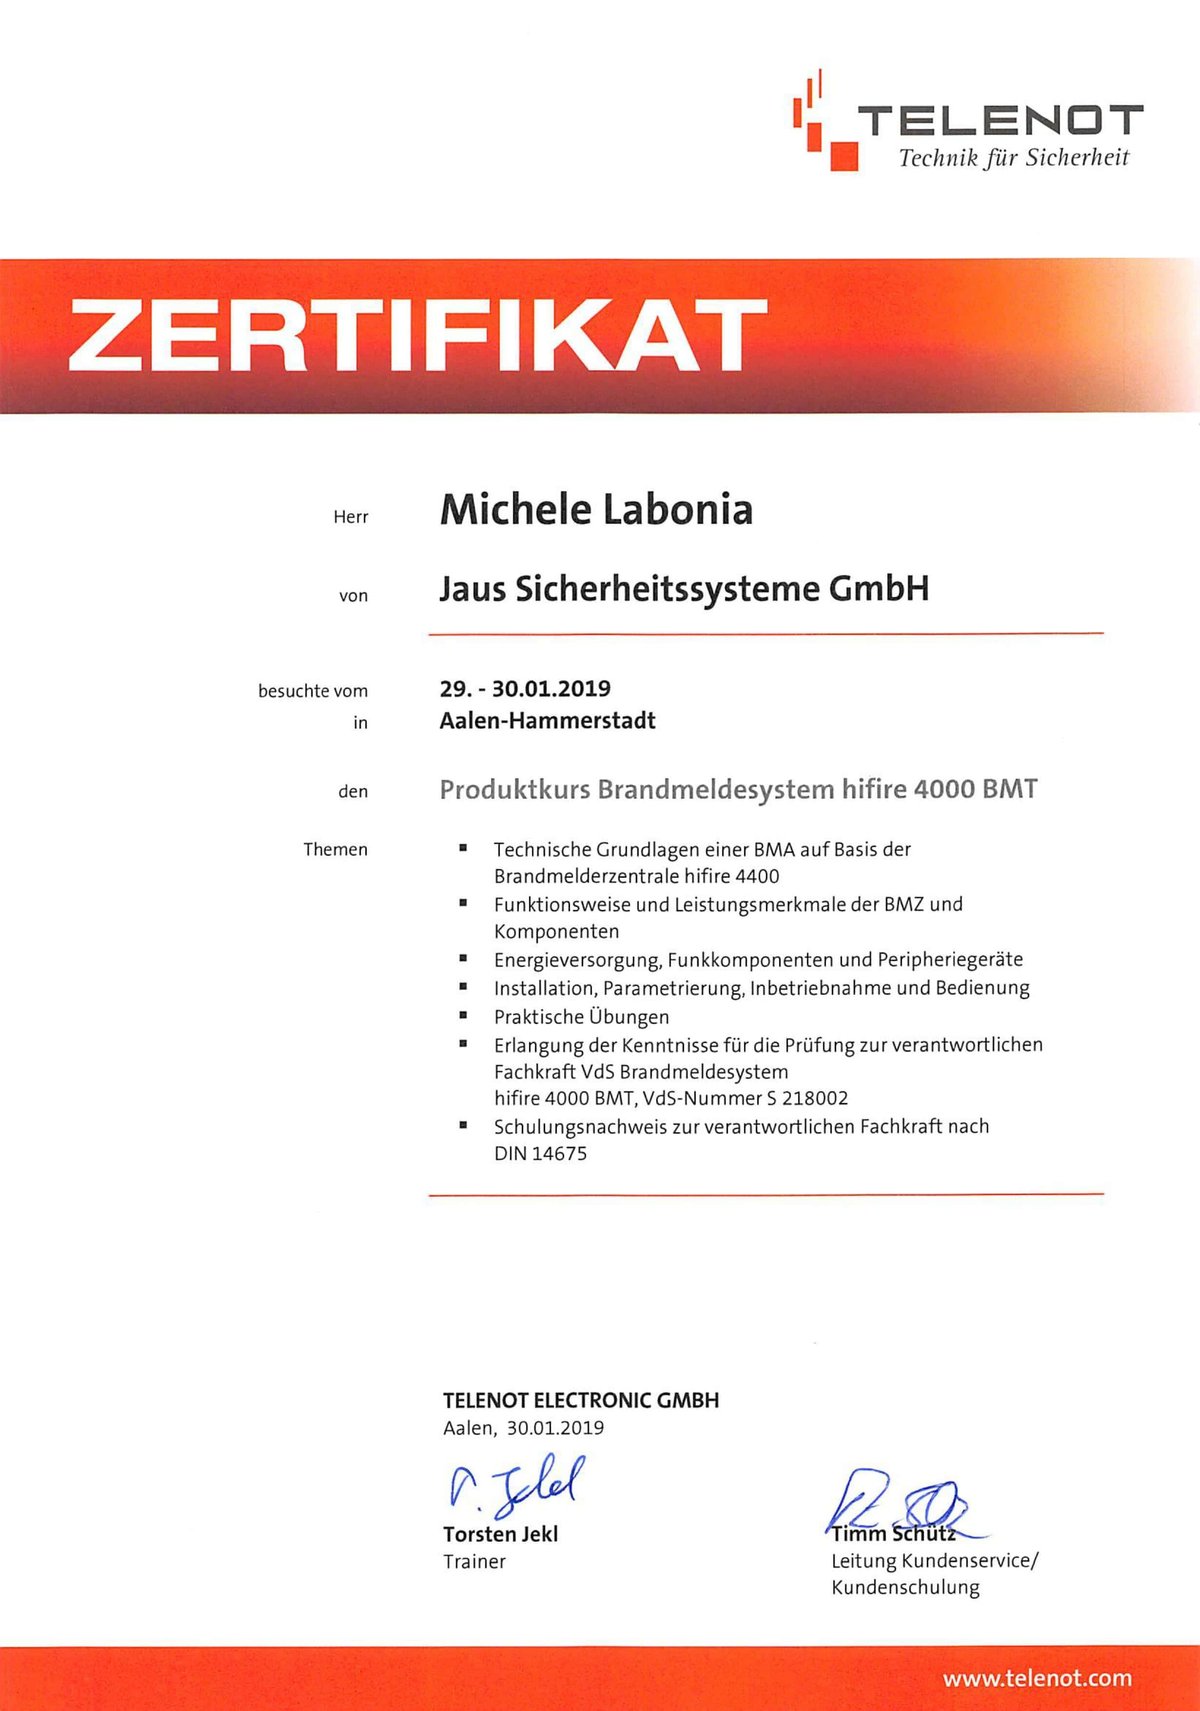 Zertifikat, Labonia, Telenot, Brandmeldesystem hifire 4000 BMT, BMA